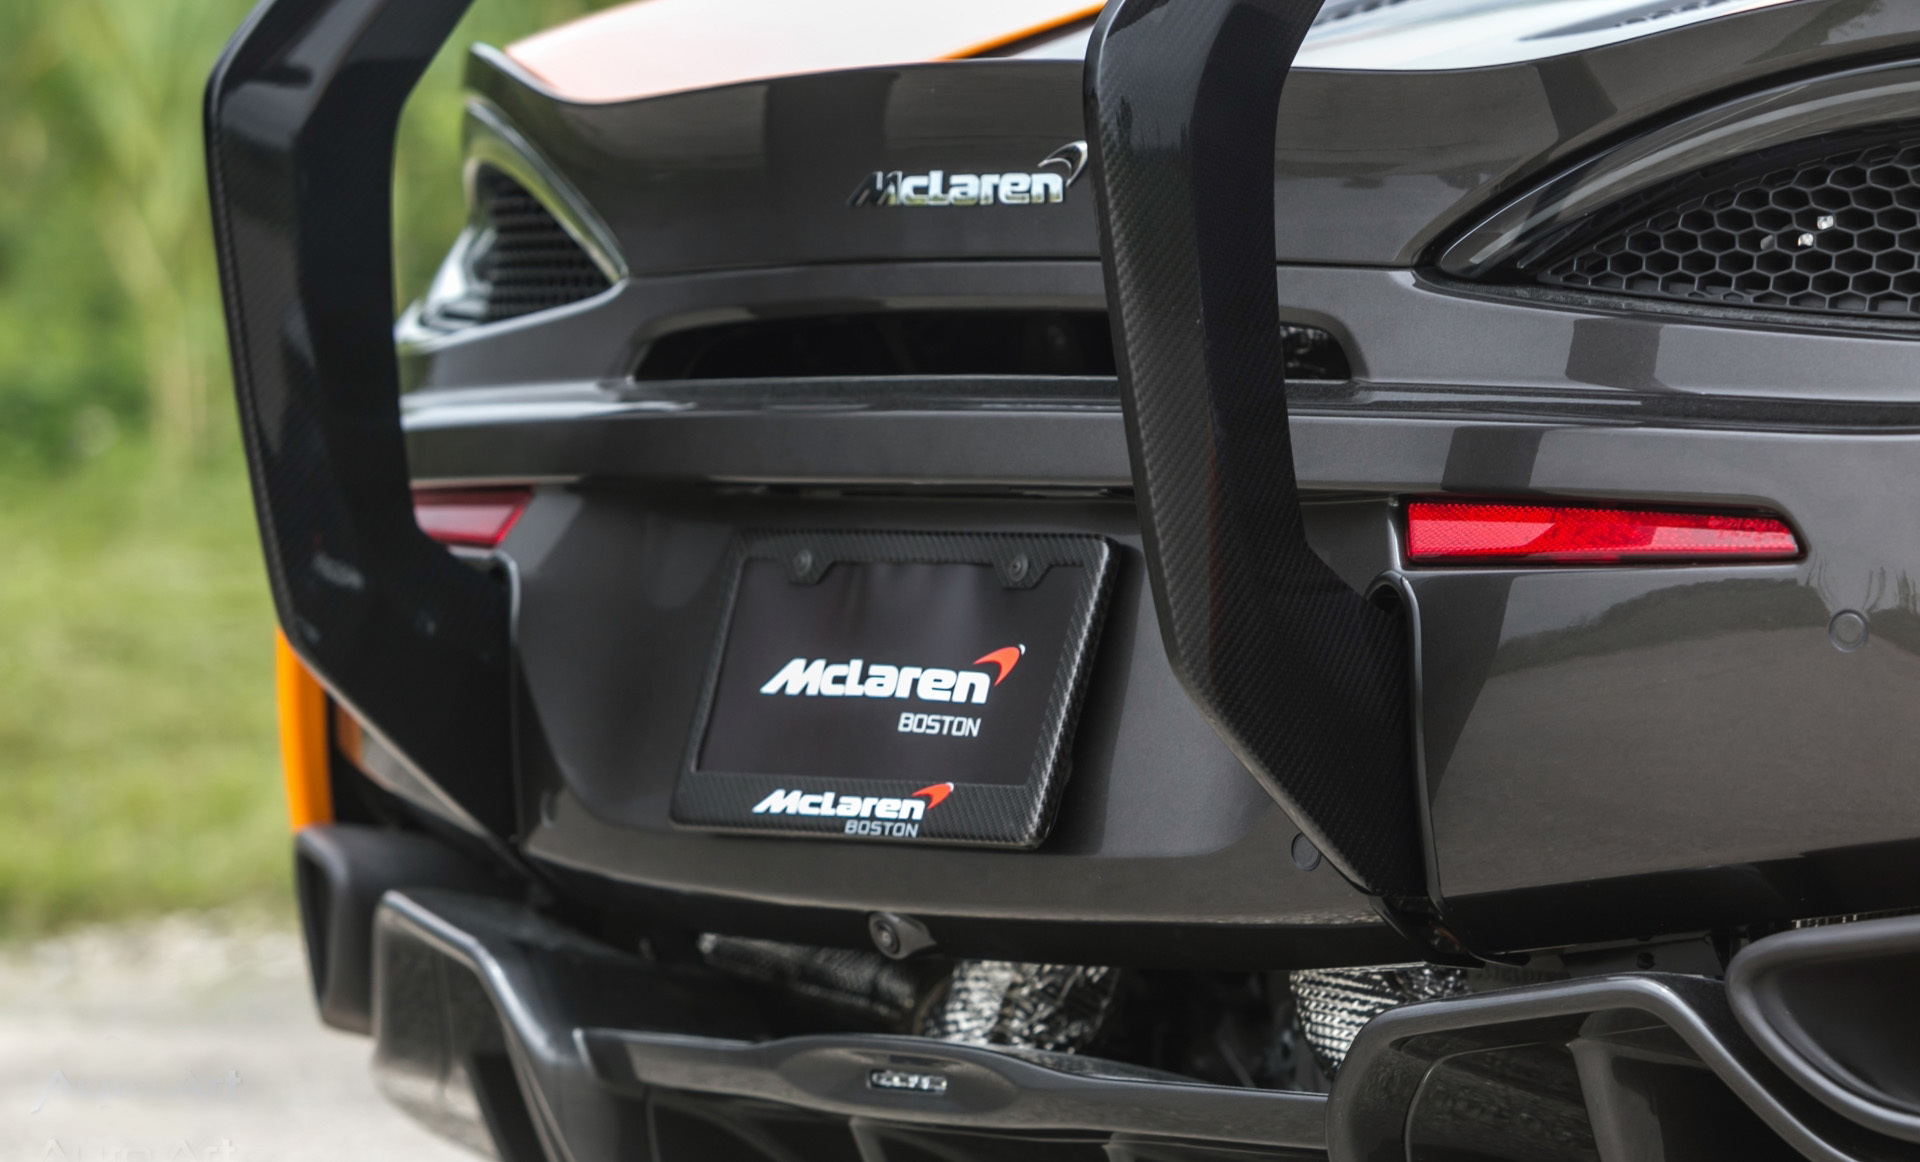 Vorsteiner Nero body kit for McLaren 570S carbon fiber